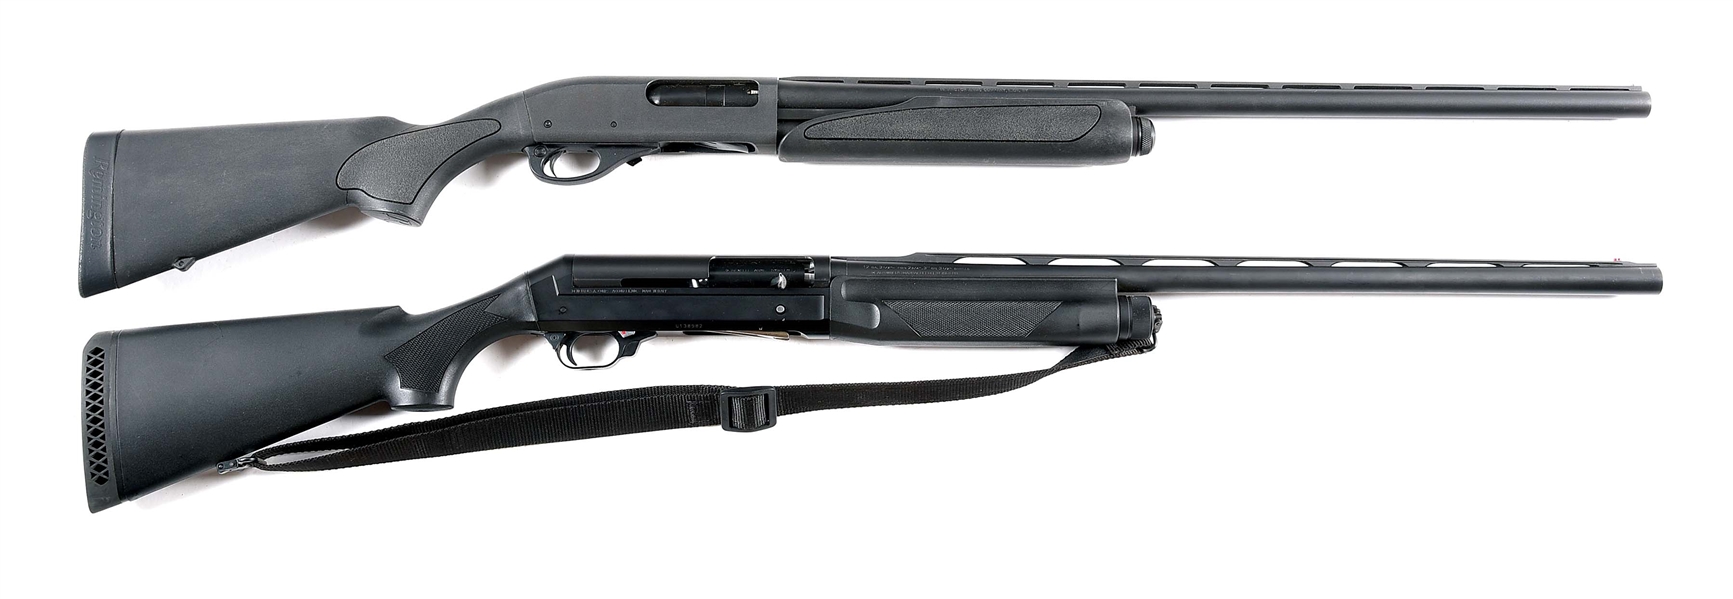 (M) LOT OF 2: REMINGTON 870 AND BENELLI SUPER BLACK EAGLE SEMI AUTOMATIC SHOTGUNS.